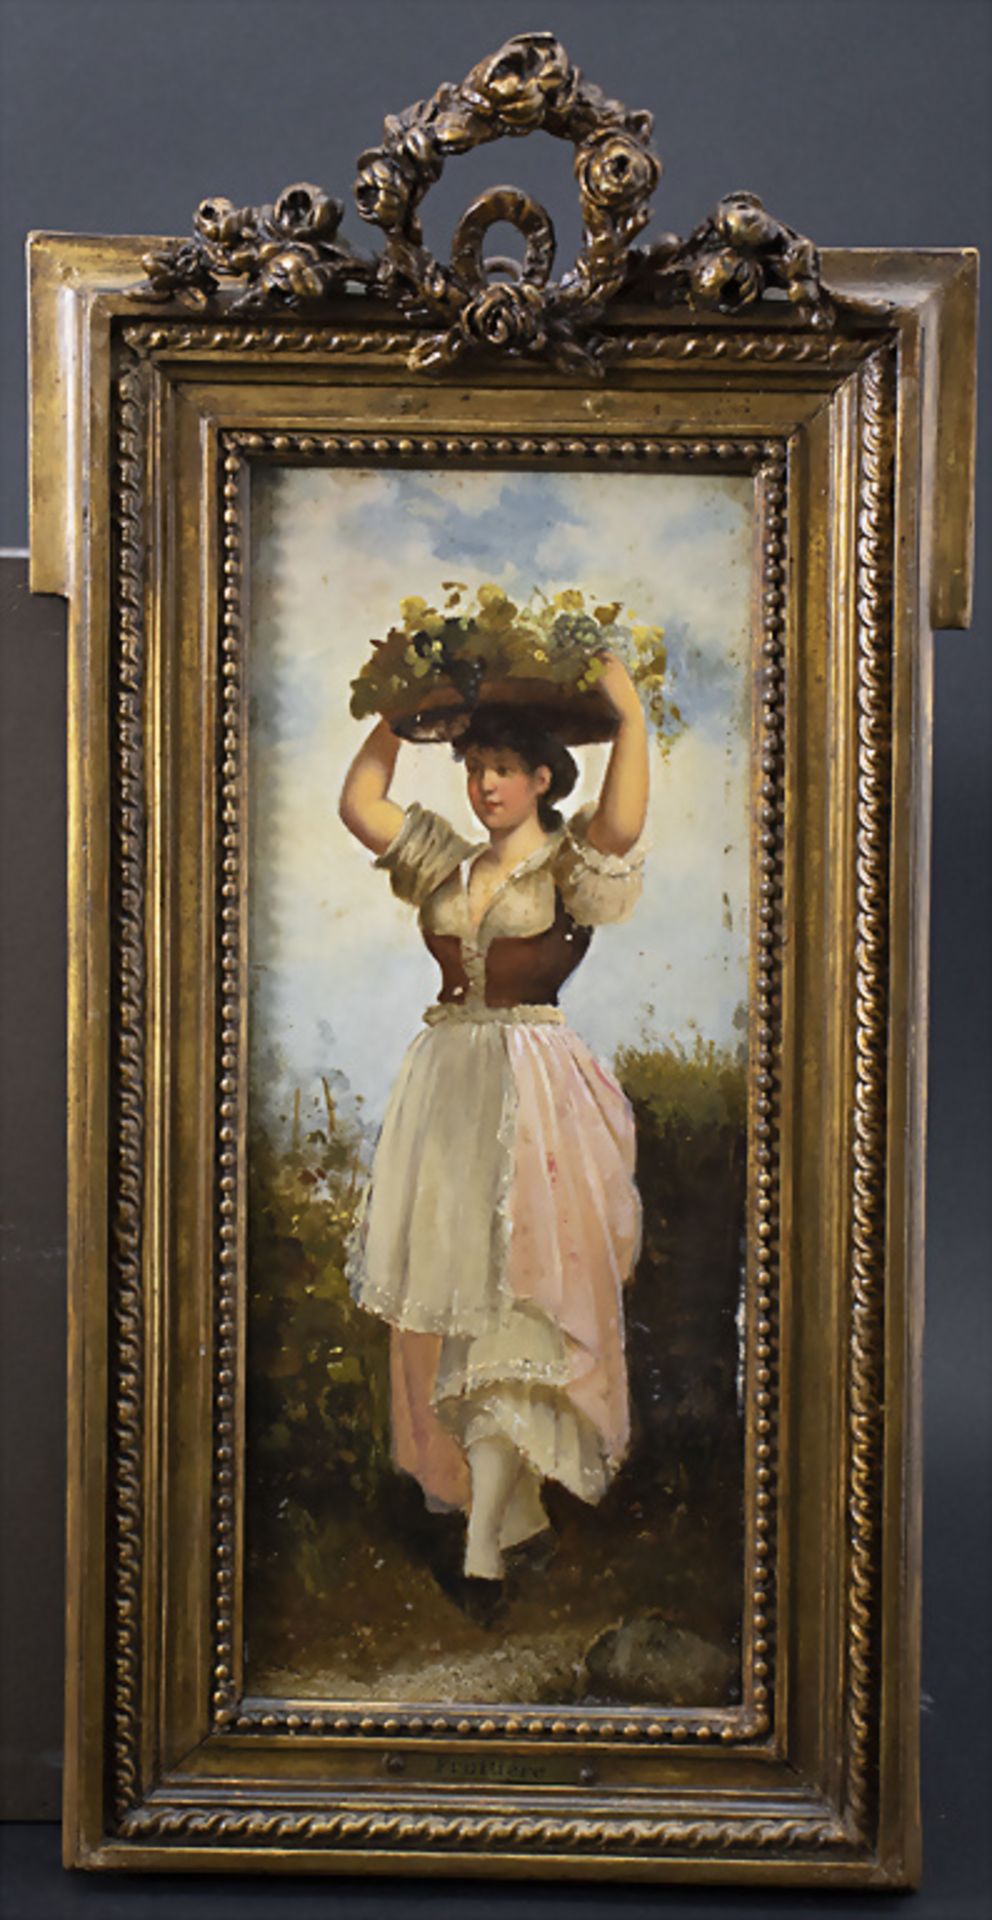 Künstler des 19. Jh., 'Fruitière' / Artist of the 19th century, 'Fruit carrier' - Bild 2 aus 4